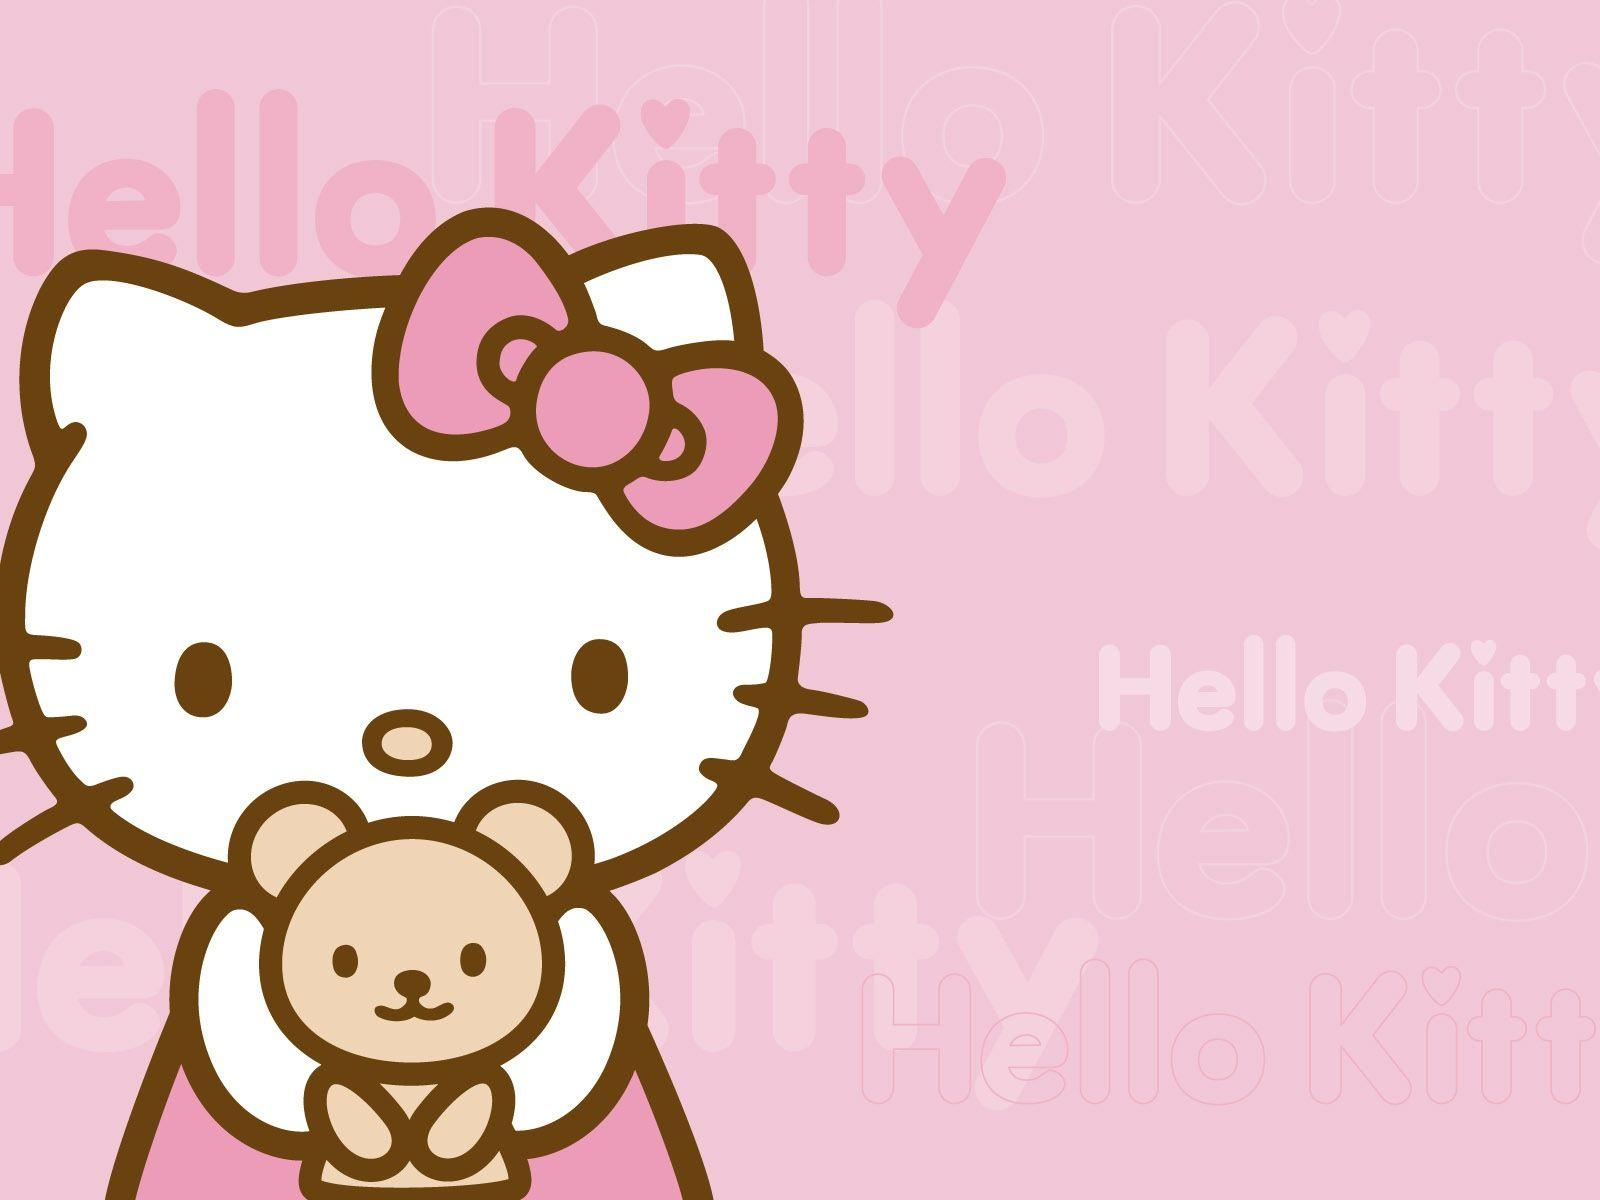 Hello Kitty Wallpaper HD. Wallpaper, Background, Image, Art